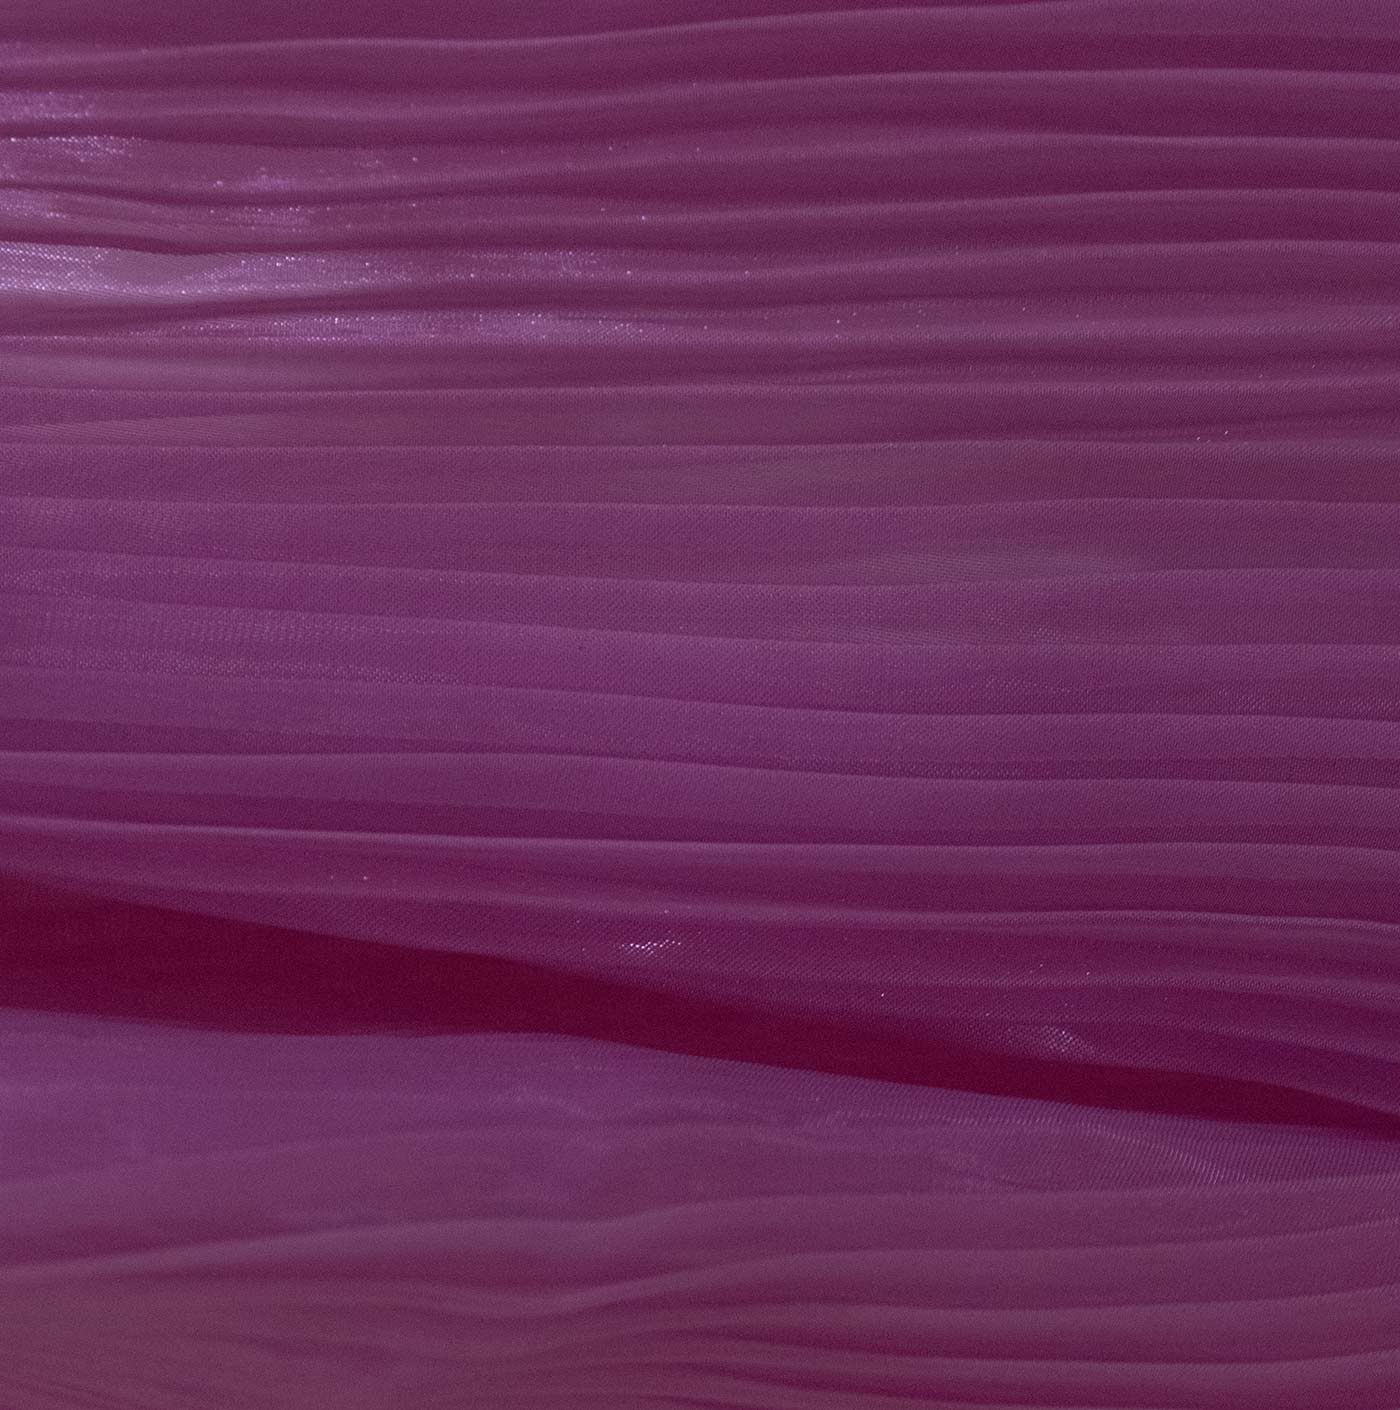 Pleated Purple Organza Fabric